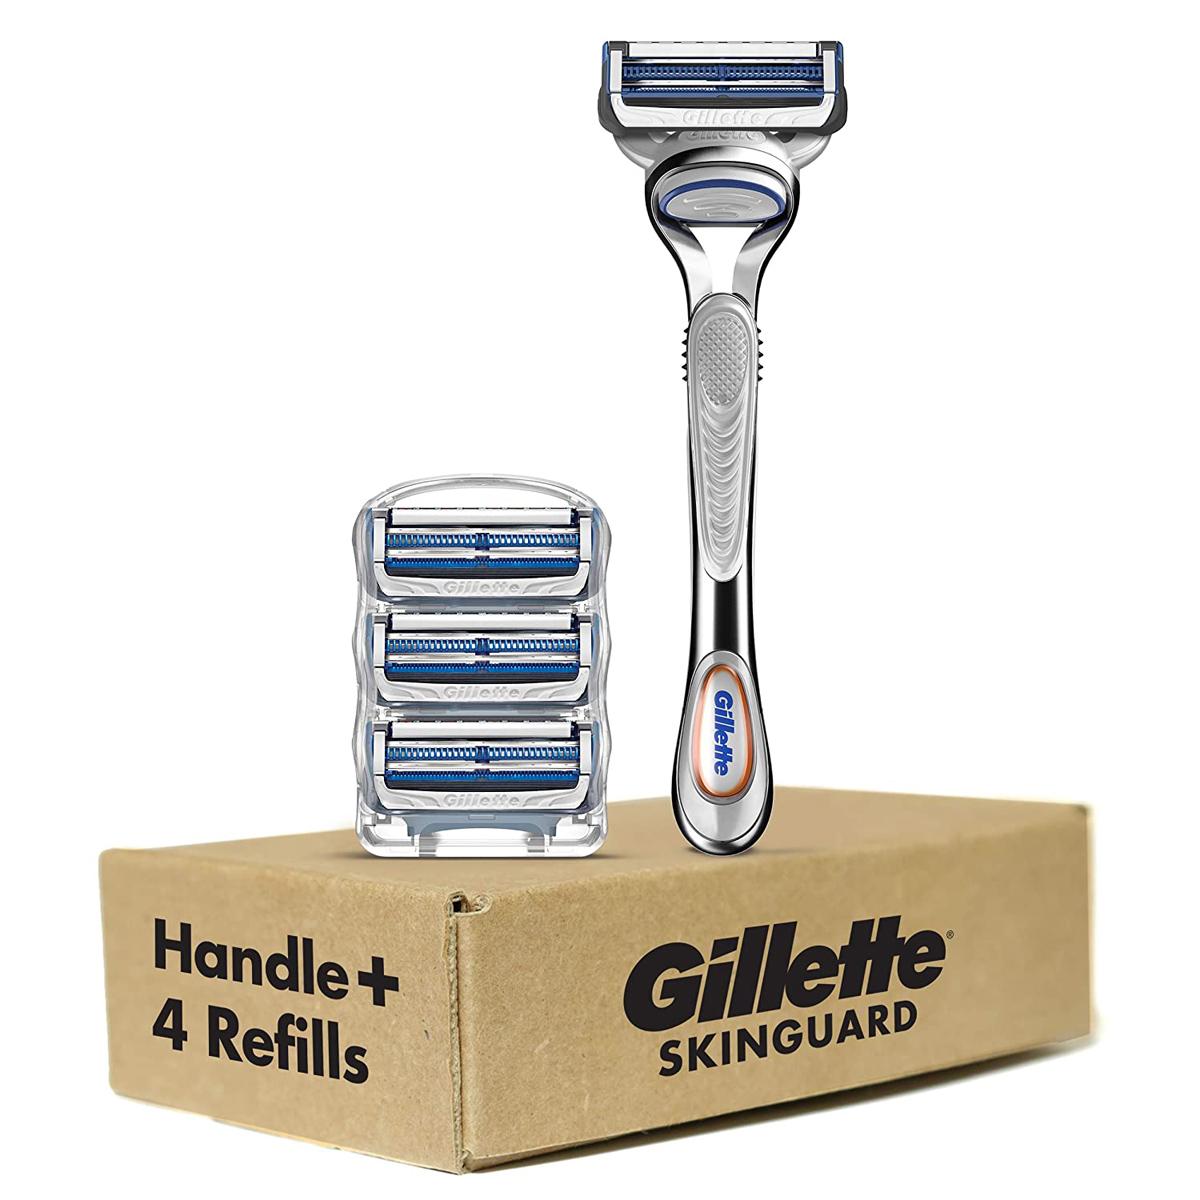 Gillette SkinGuard Mens Razor and Razor Blades for $11.27 Shipped